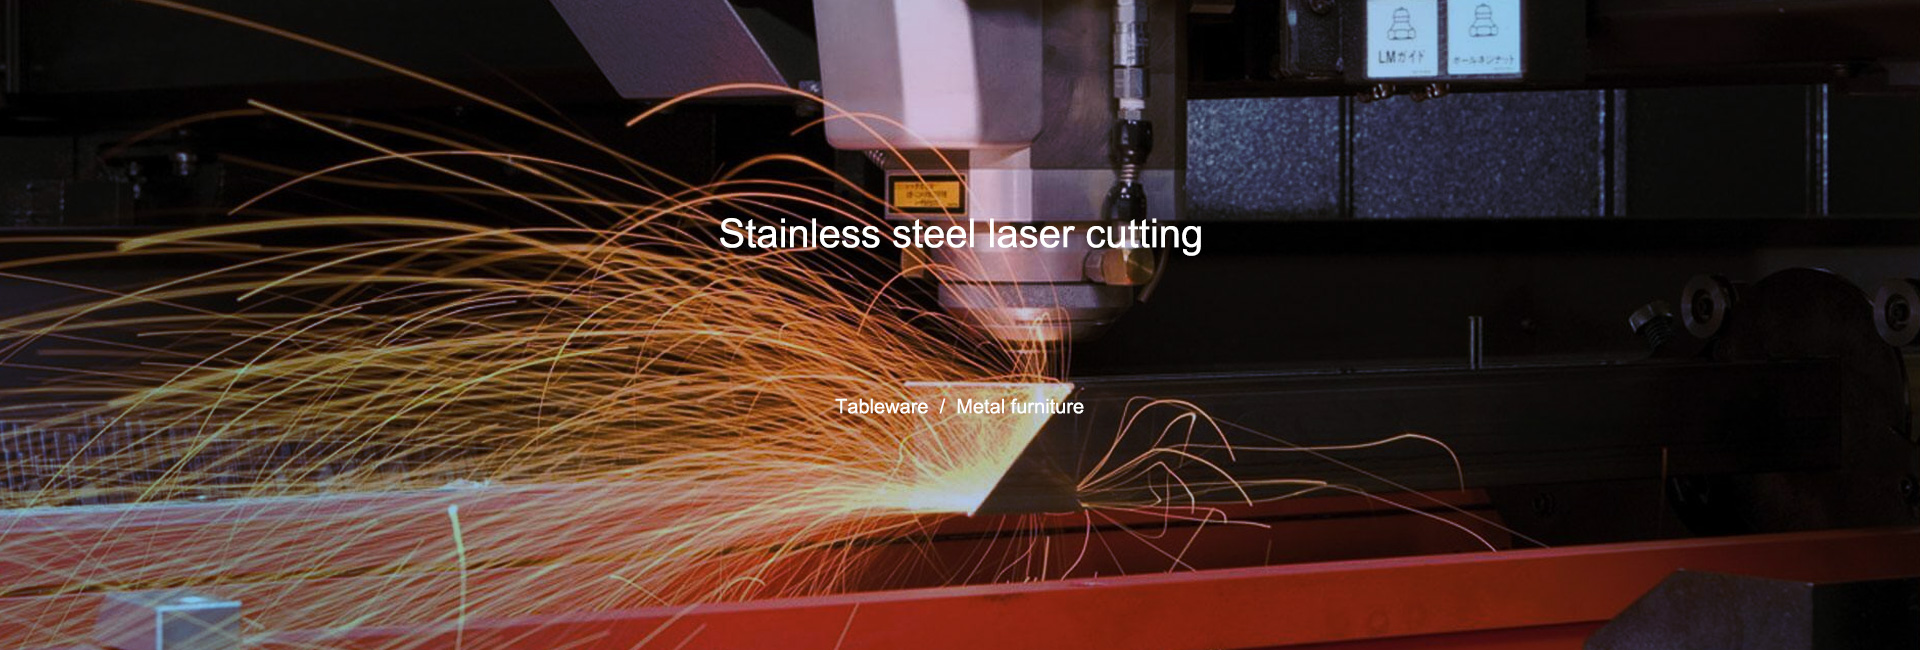 Stainless-steel-laser-cutting.jpg